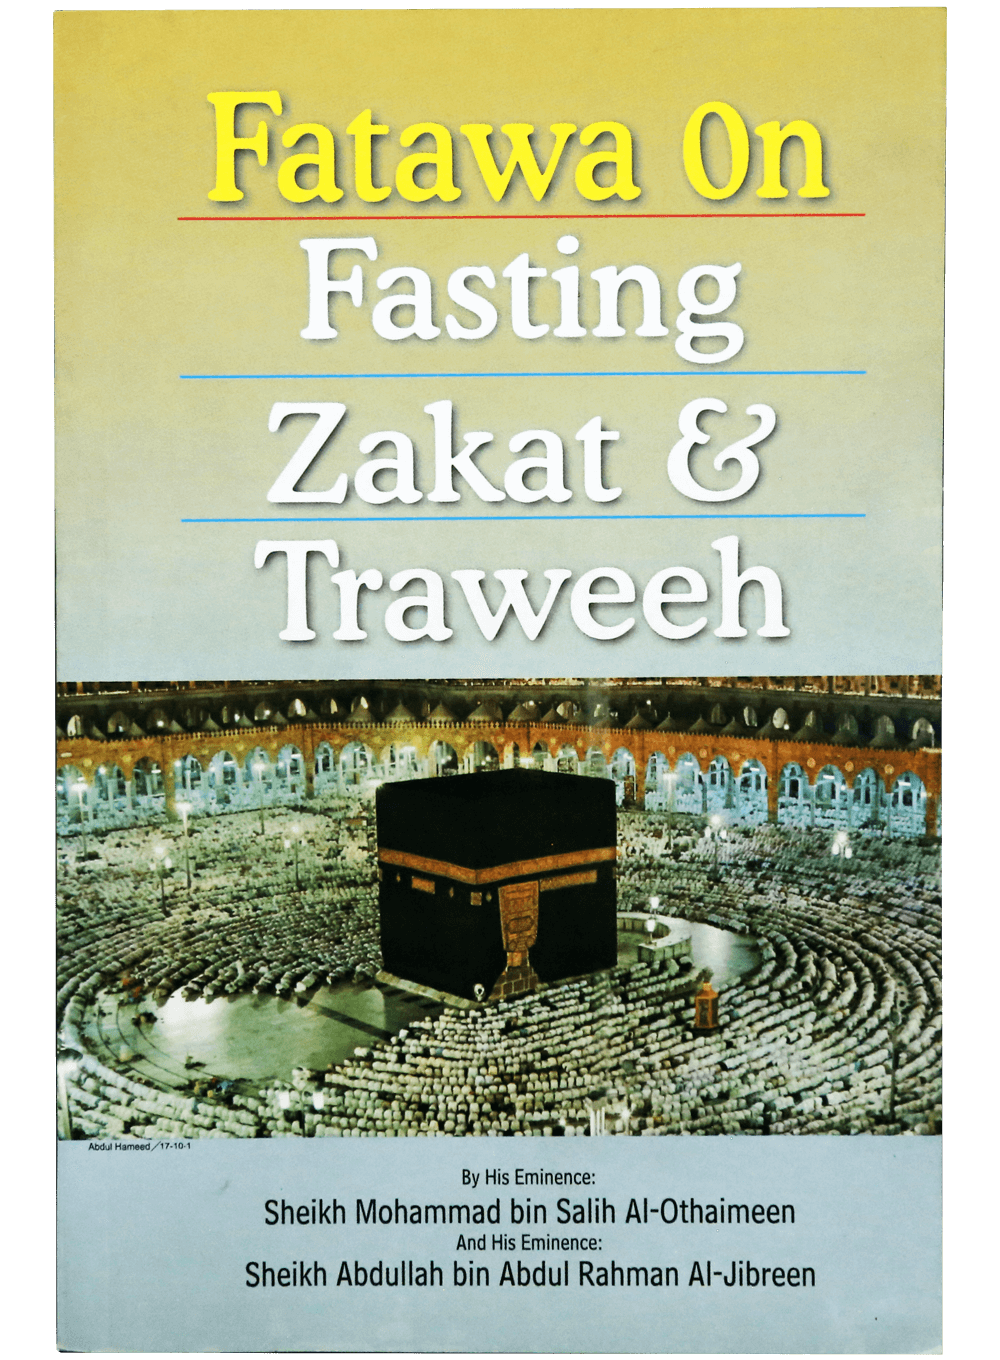 fatawa-on-fasting–zakat-and-traweeh-darussalam-20180530-141851